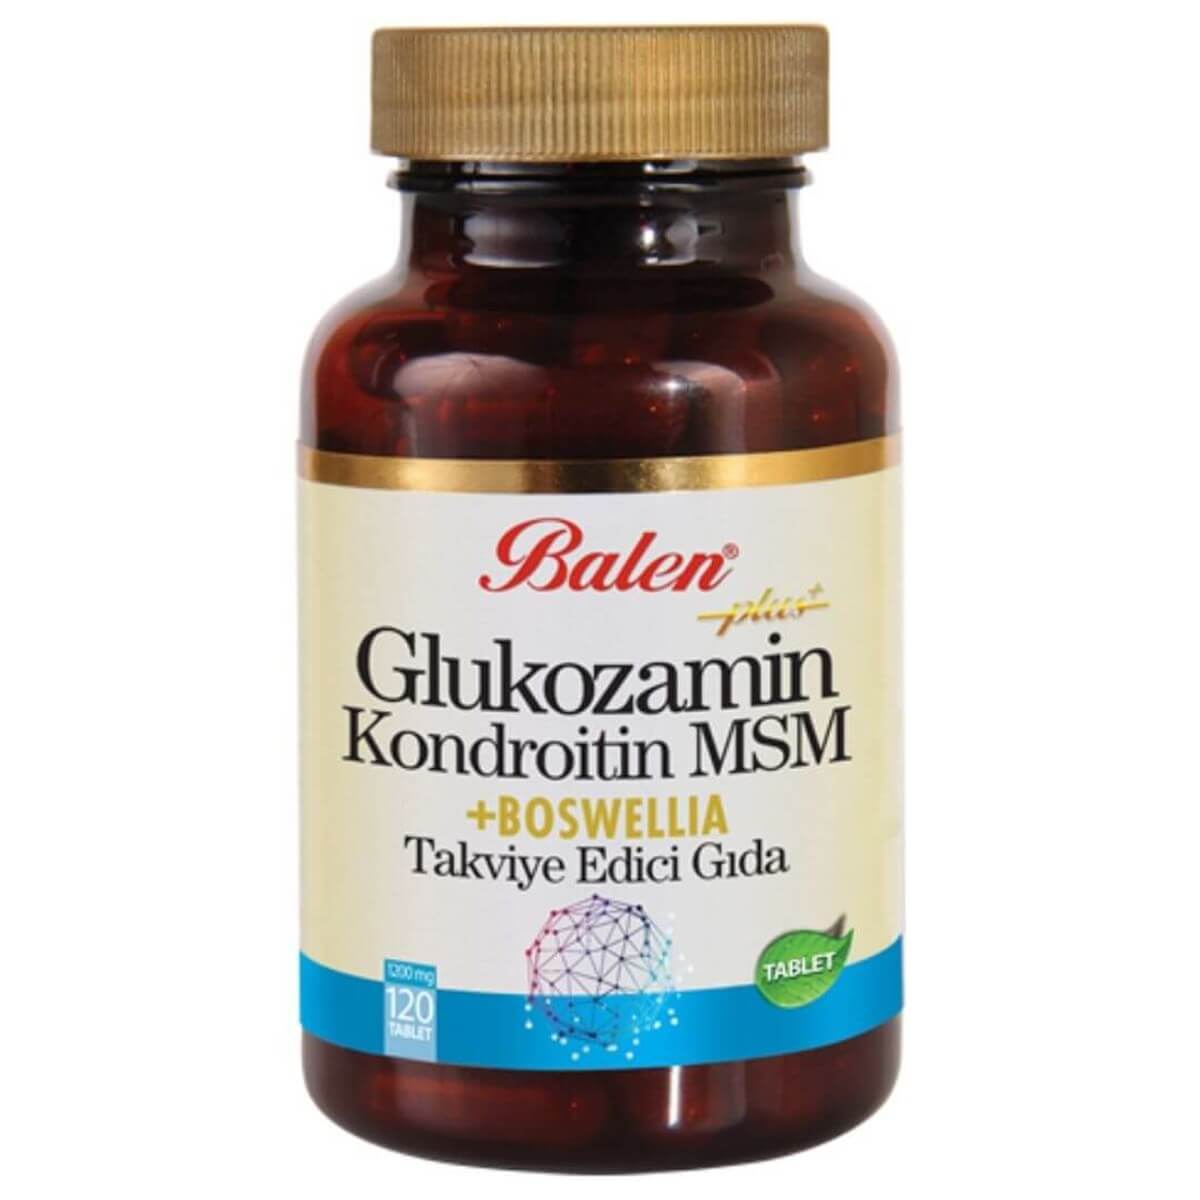 Balen Glukozamin Kondroitin MSM + Boswellia Tablet 120 X 1200 mg